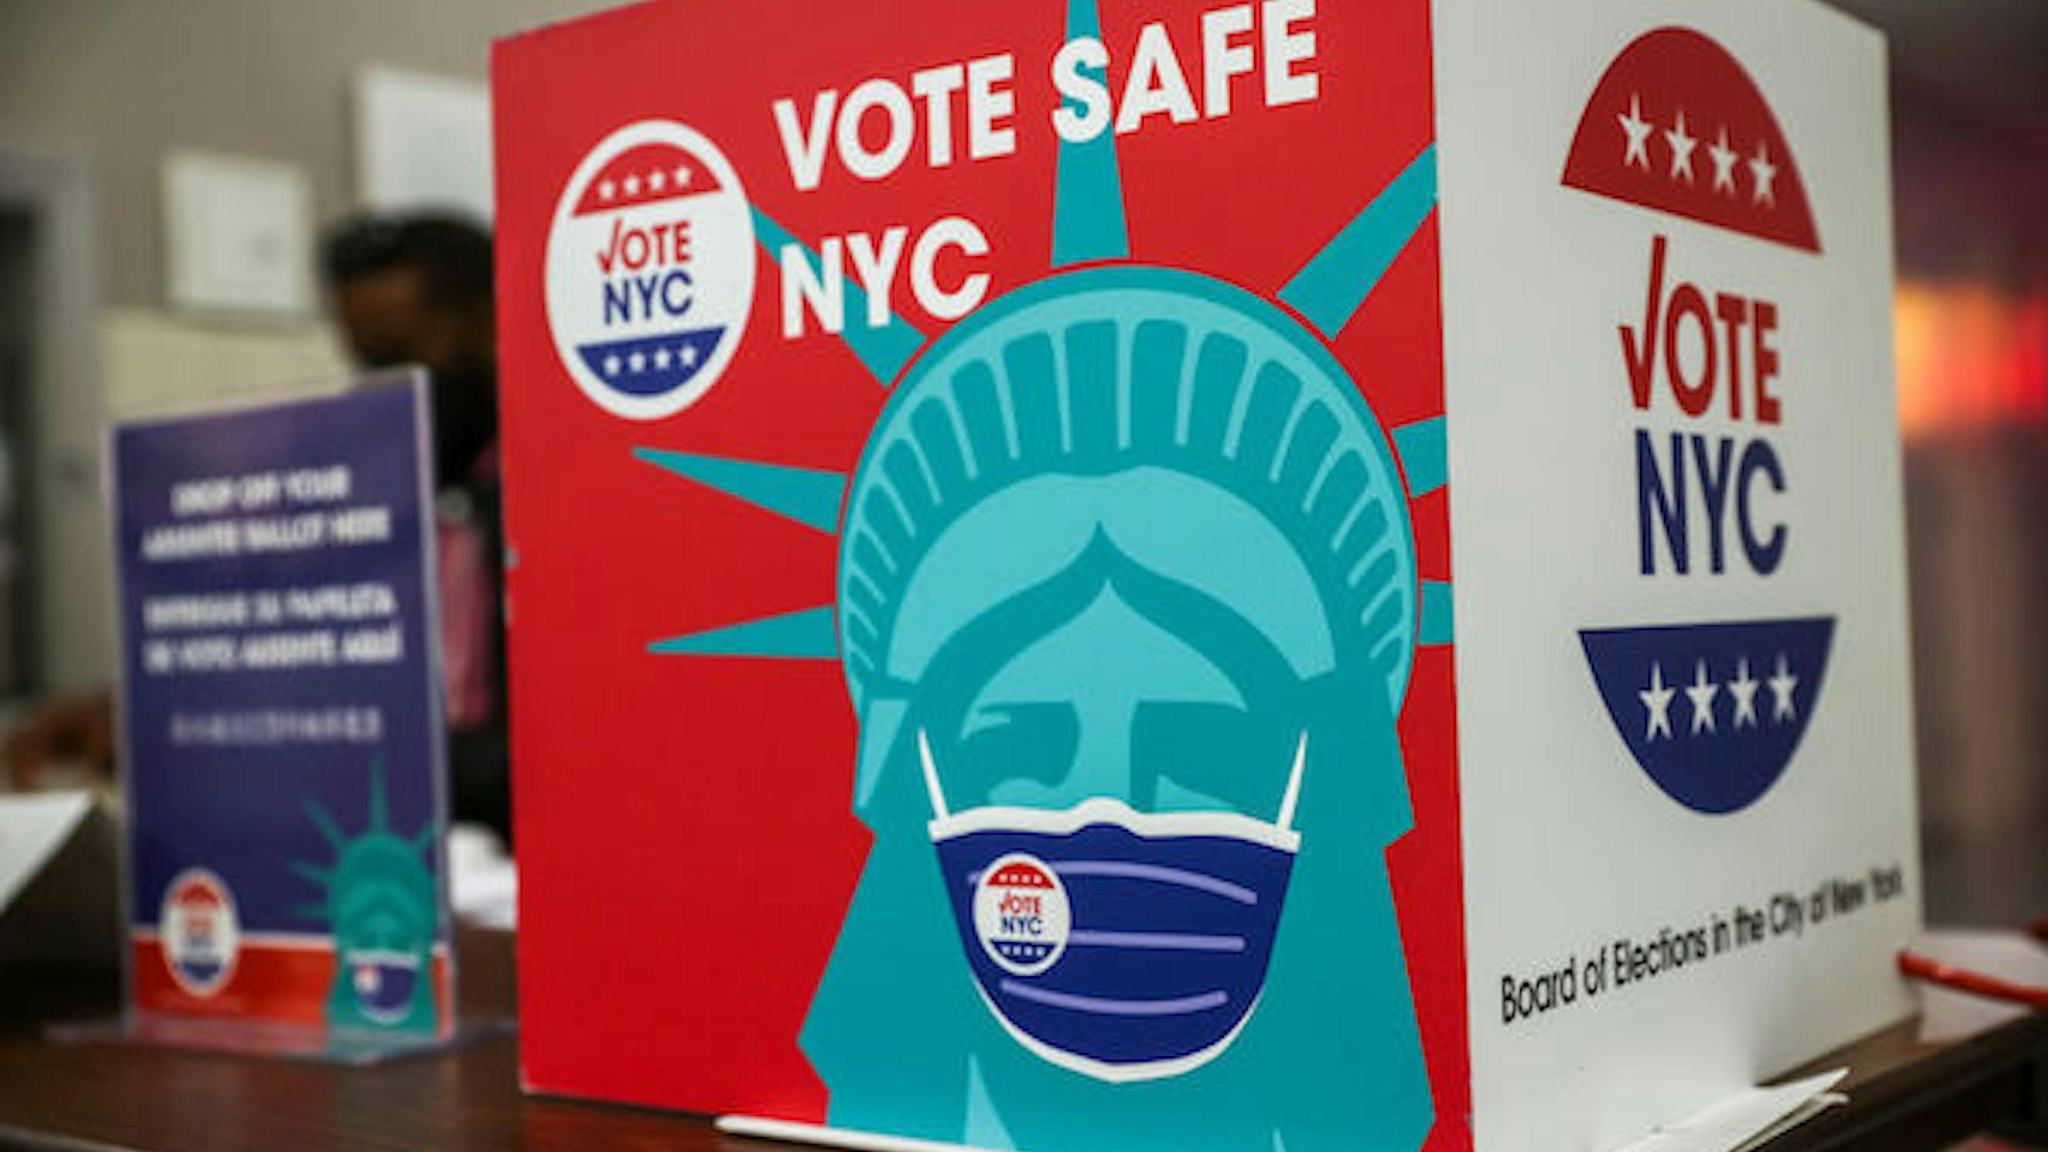 New York City's scheme to allow non-citizens to vote was struck down Monday